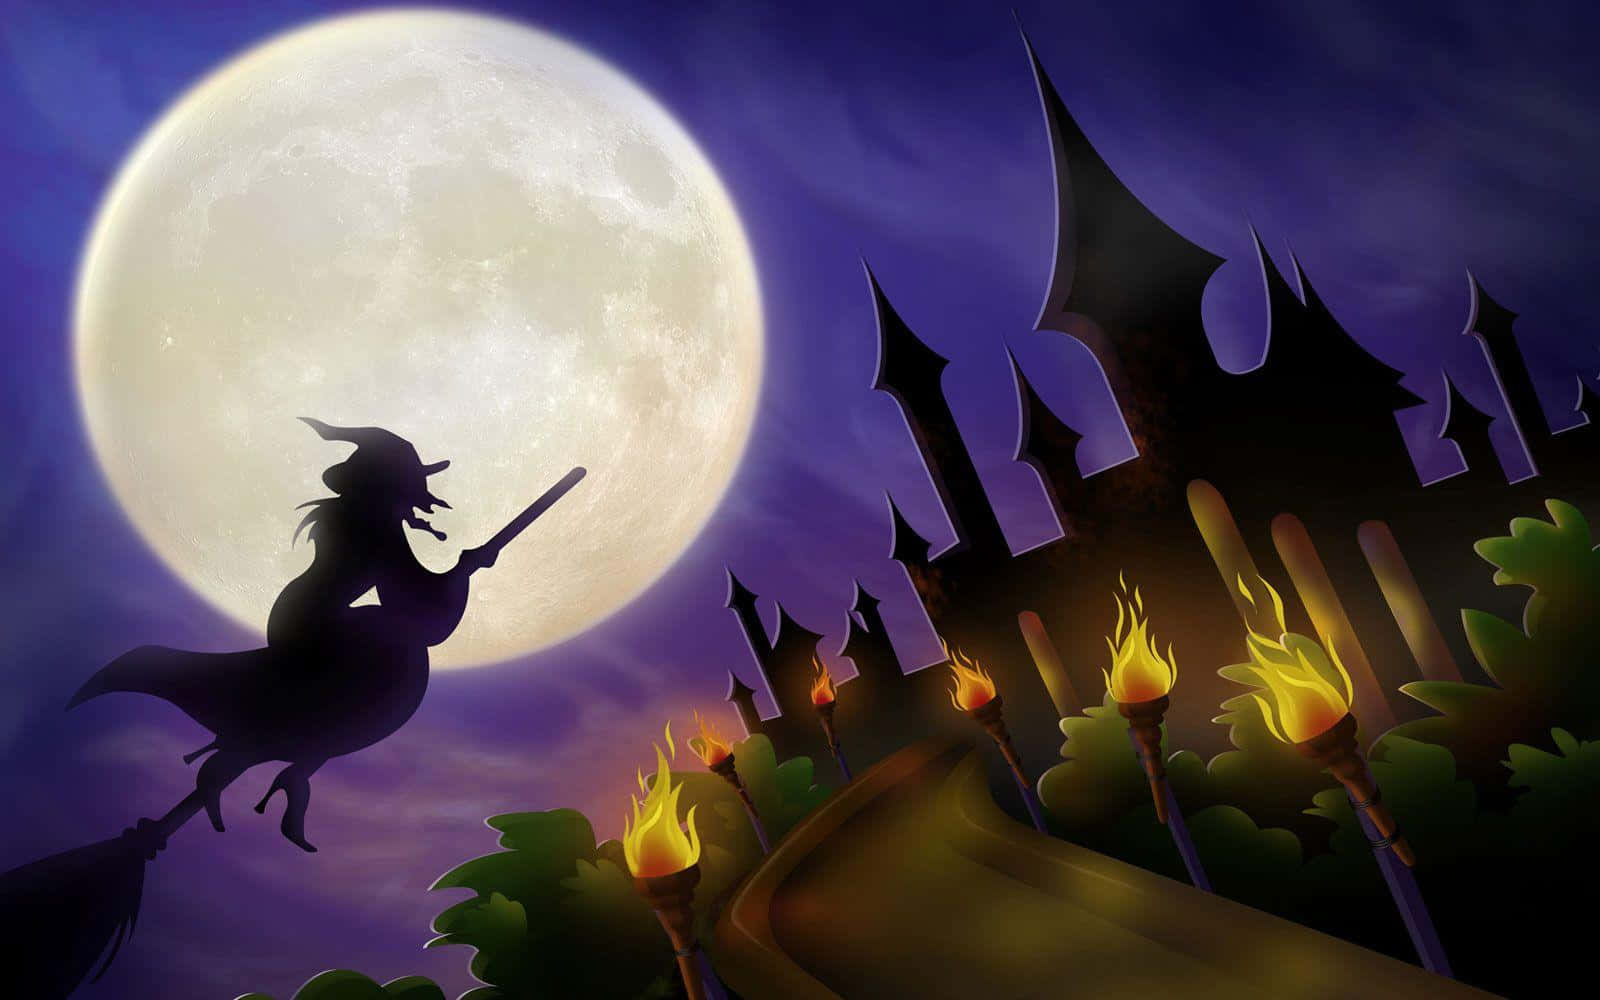 Immaginedi Una Strega Di Halloween Che Vola Su Una Scopa Durante Una Notte Di Luna Piena.